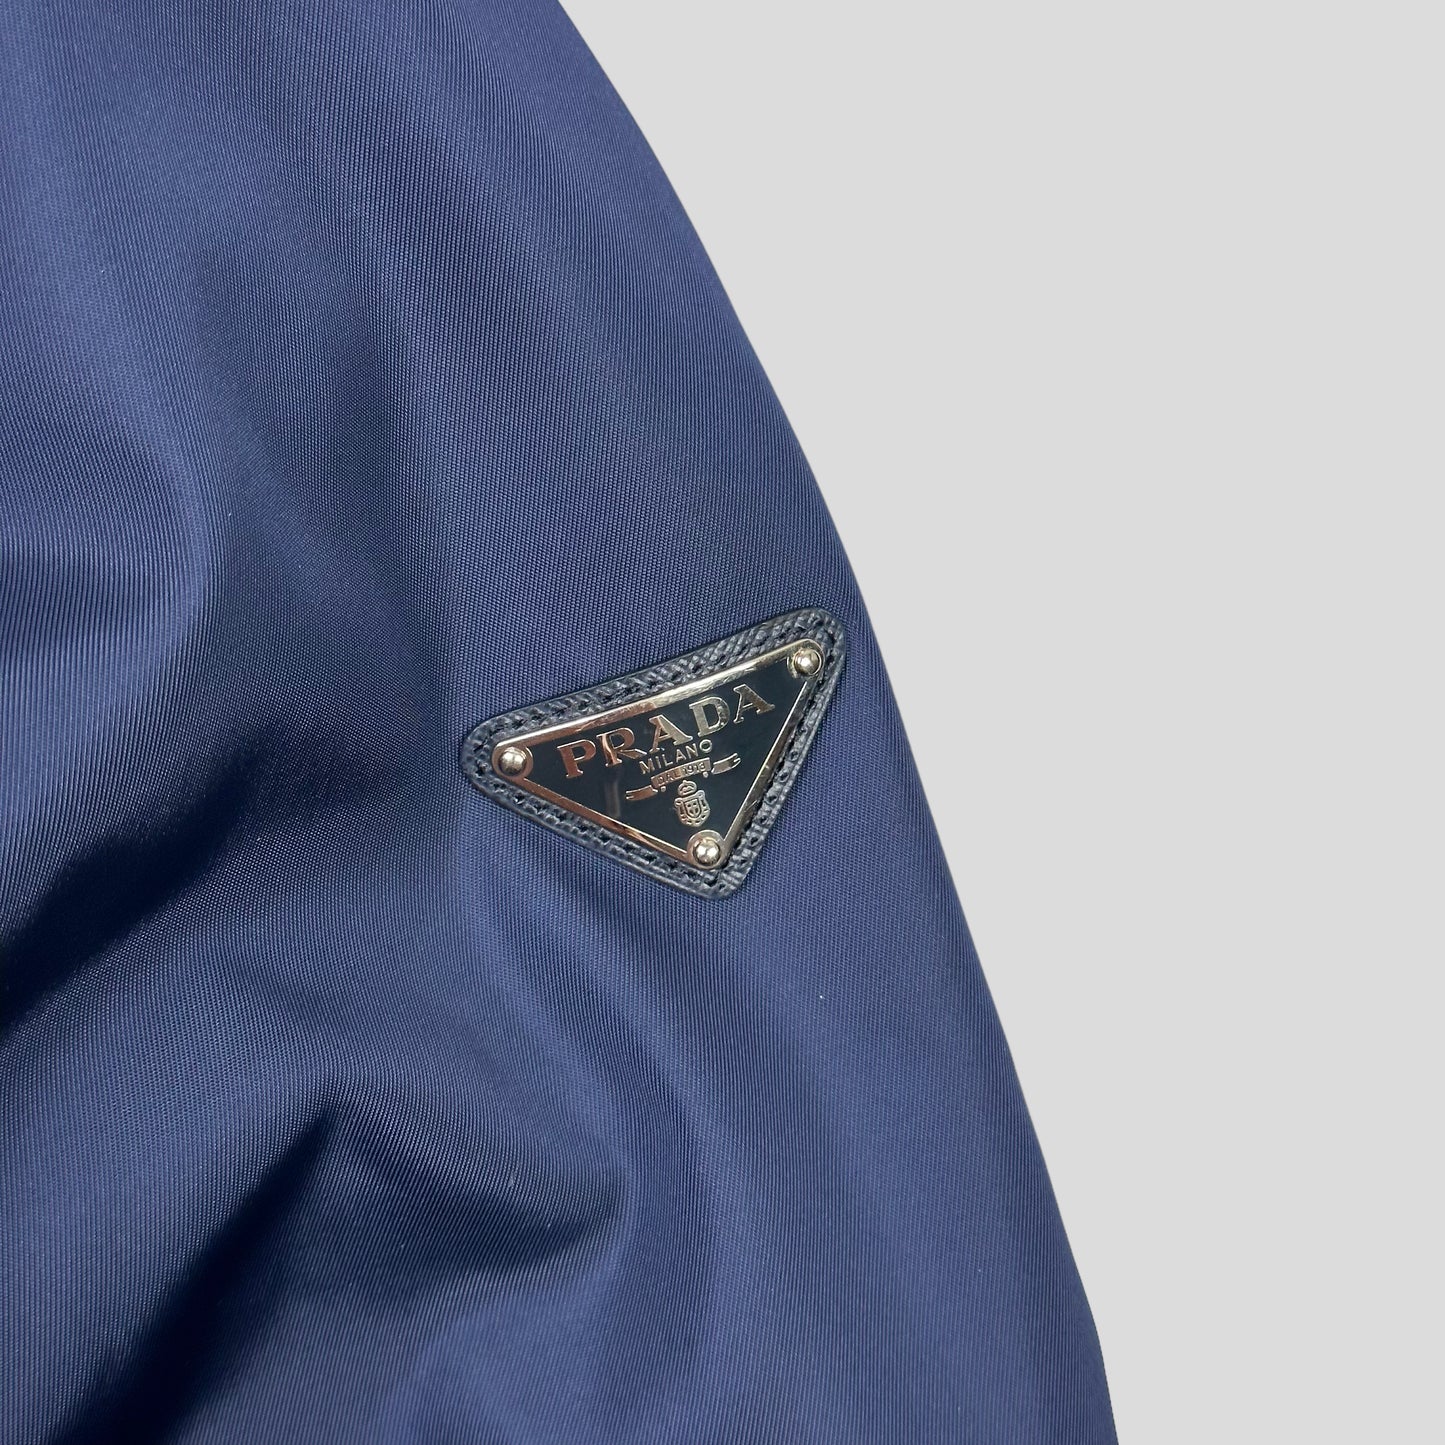 Prada Milano 2015 Nylon Bomber Jacket - XL